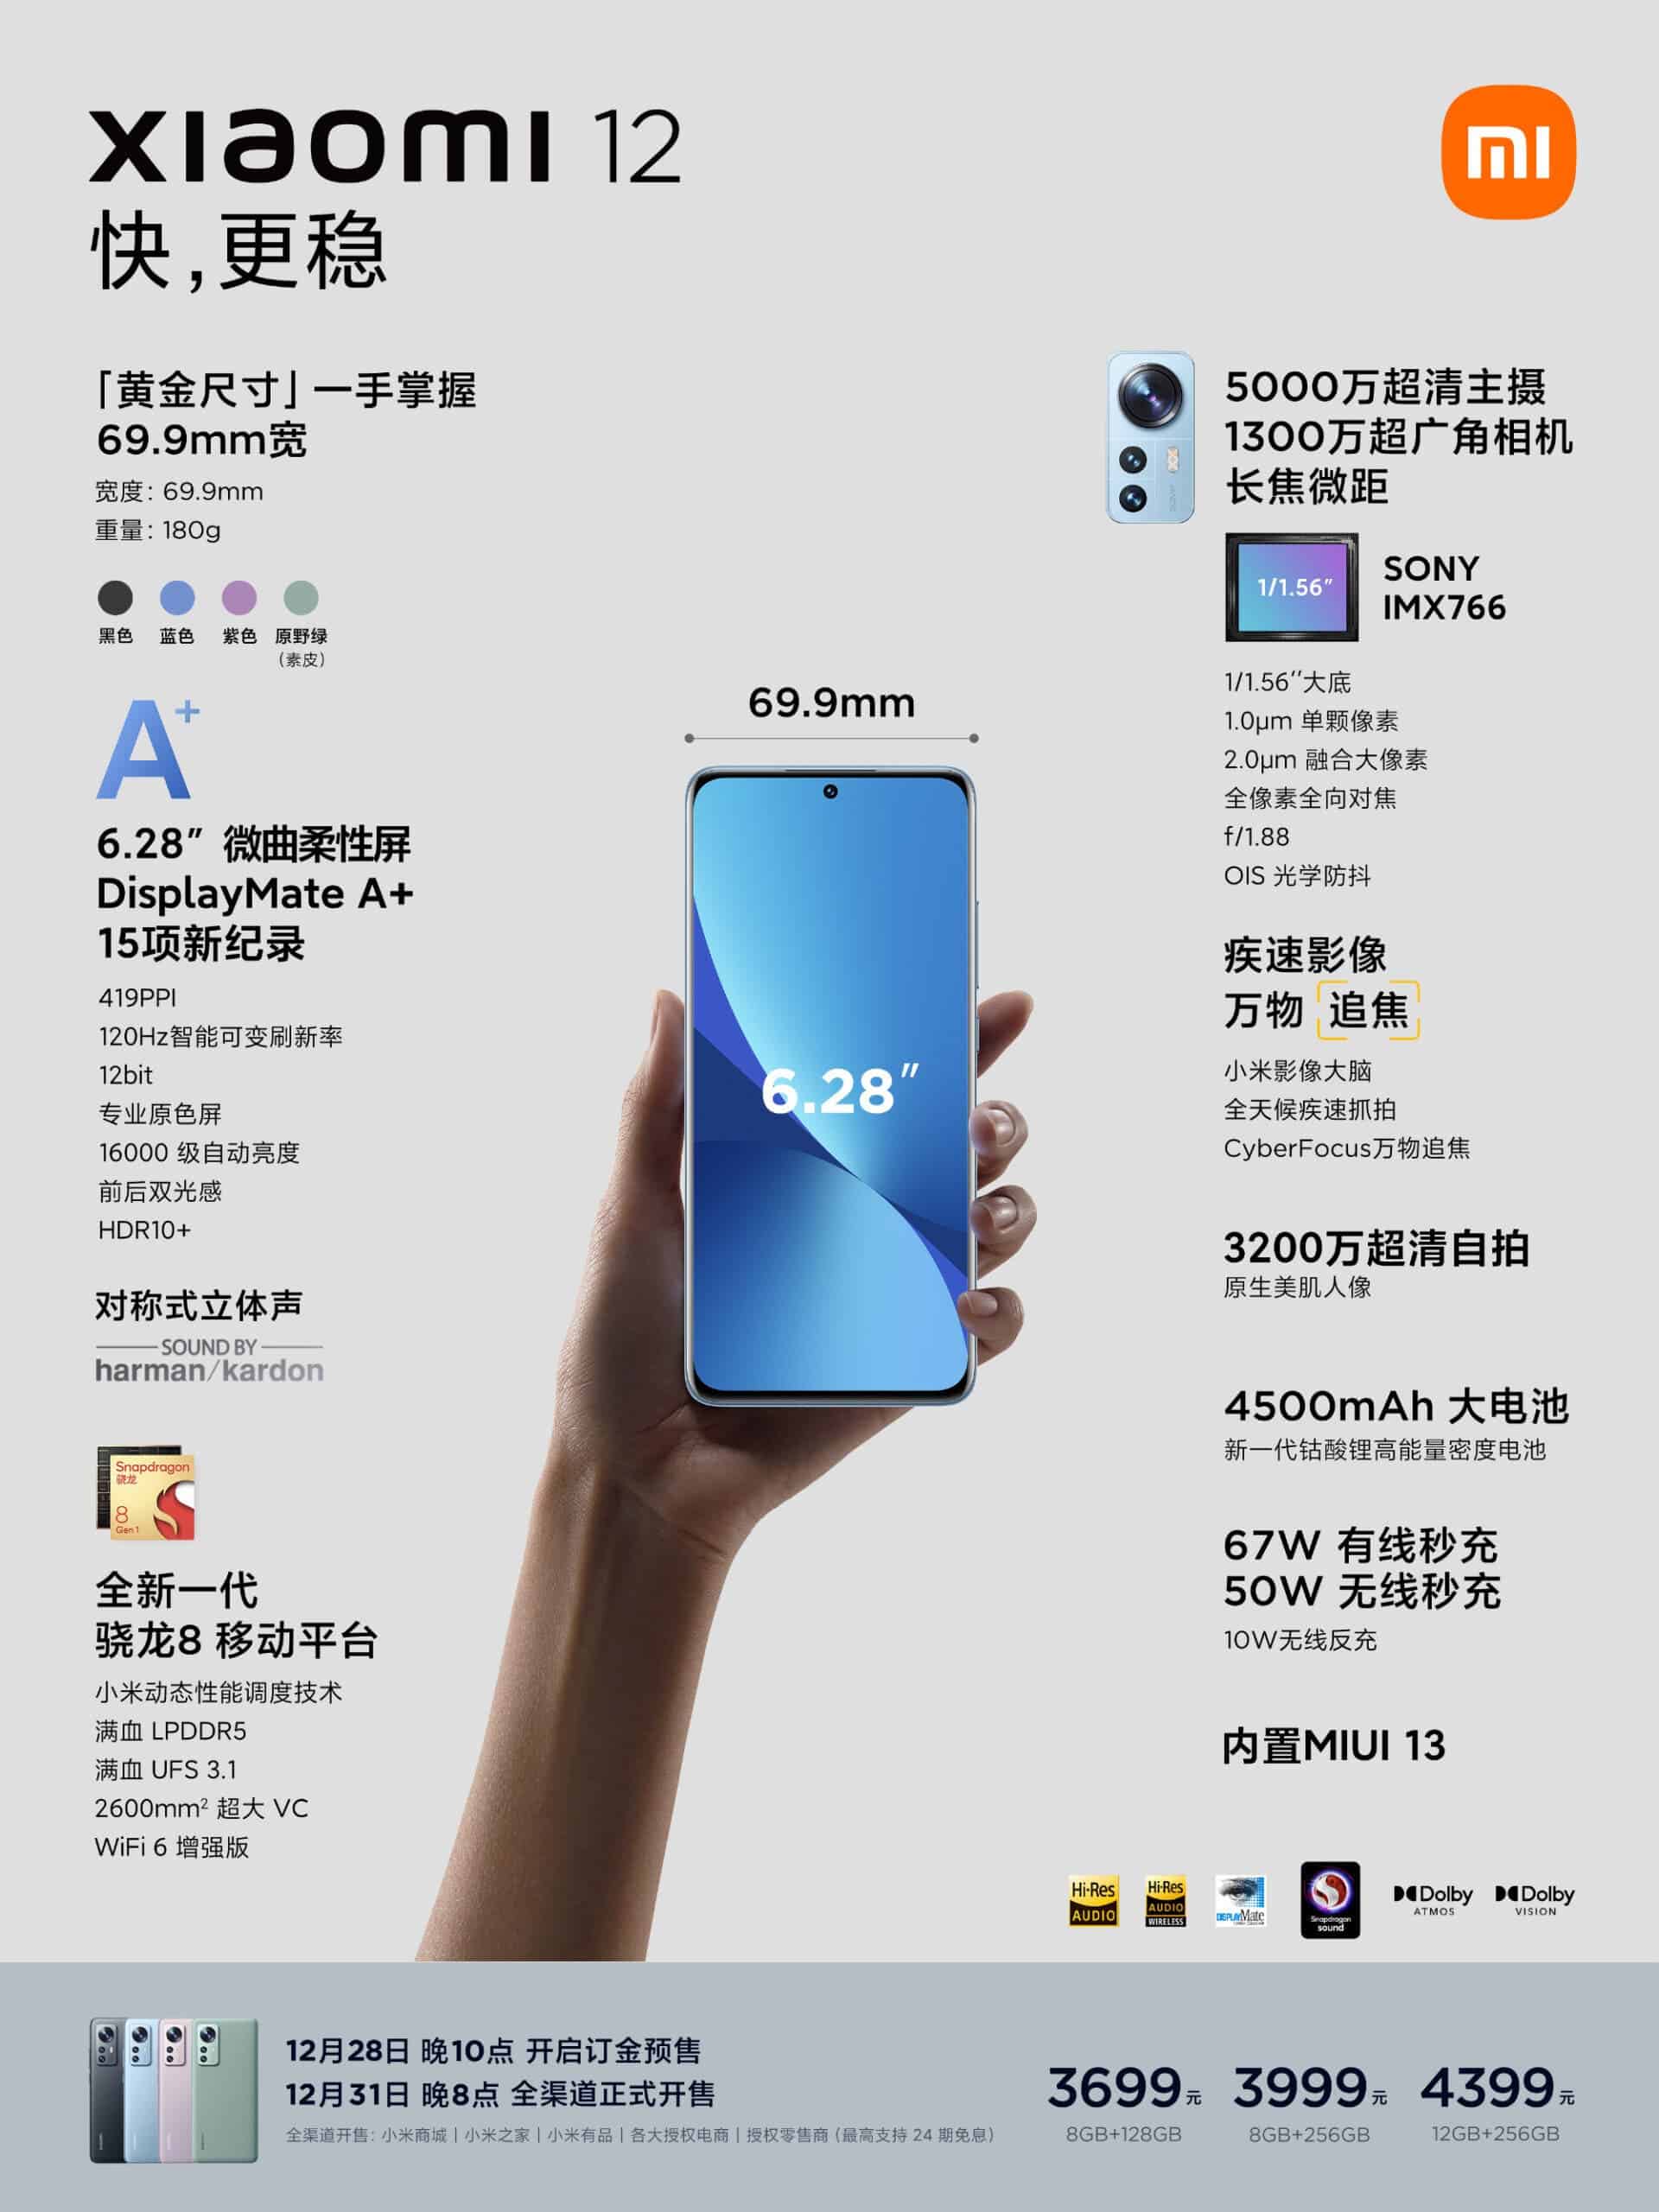 Xiaomi 12 - Smartphone 8+128GB, 6.28” 120Hz AMOLED Display